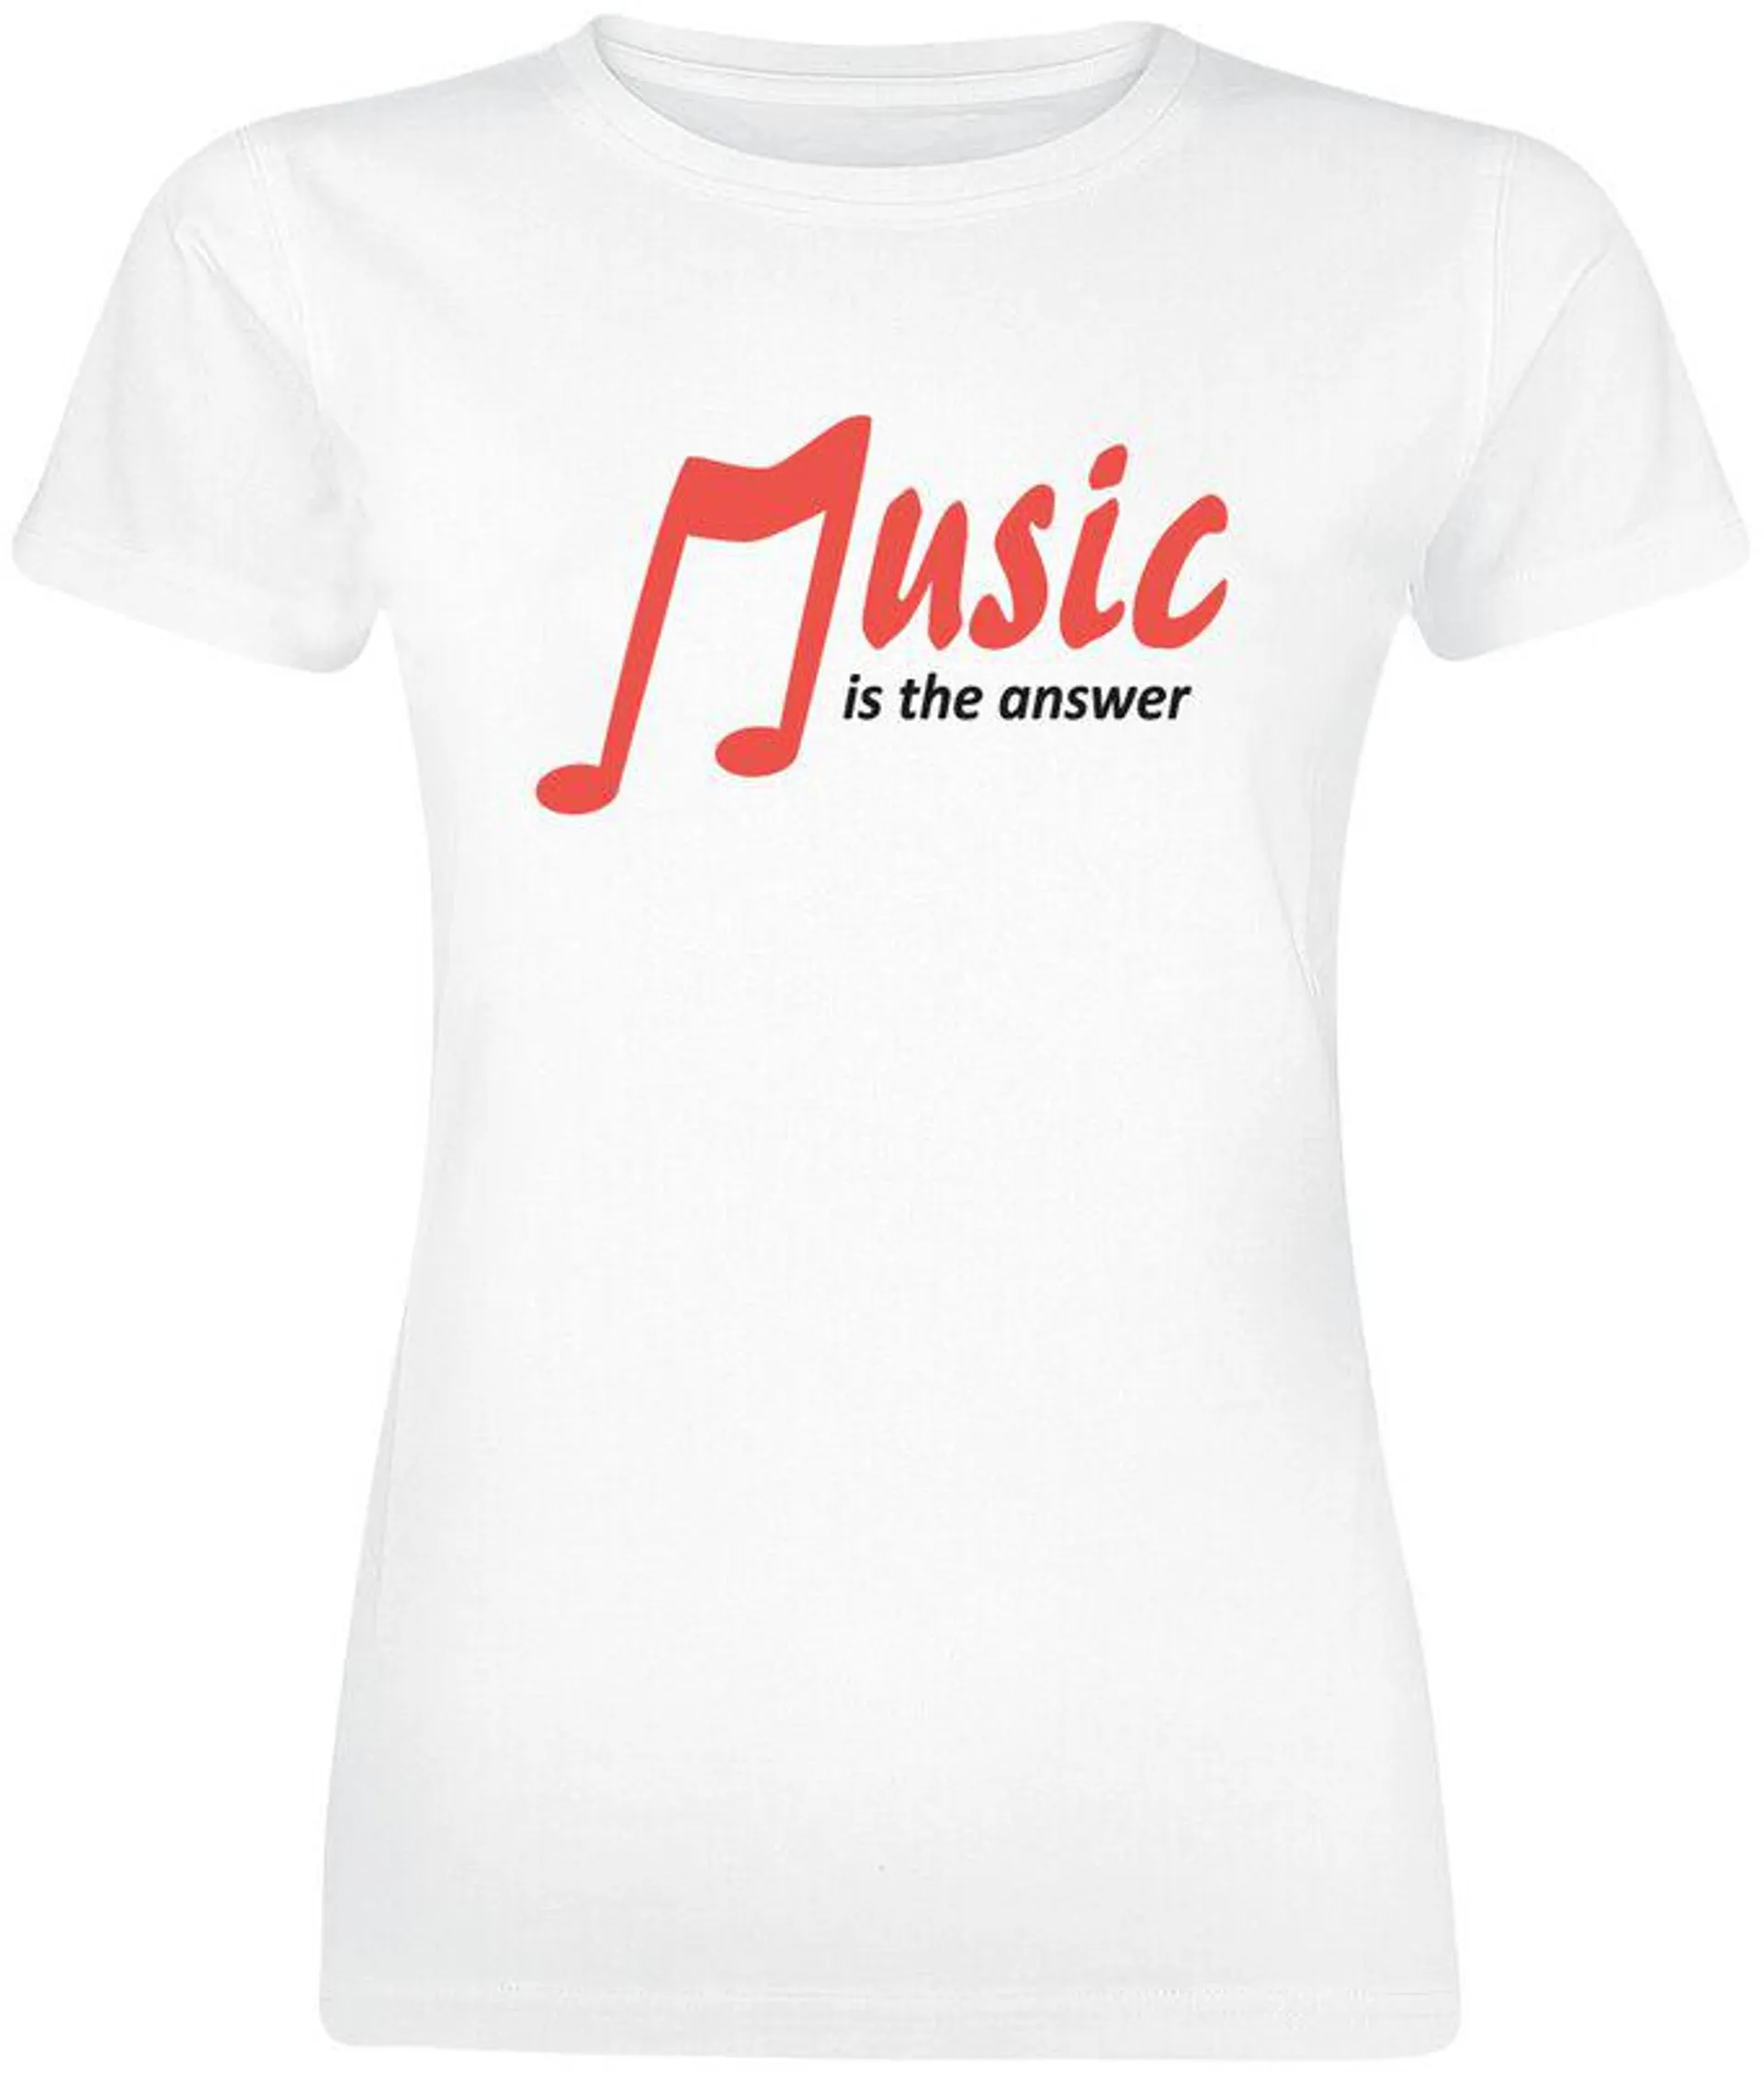 "Music is the answer" Camiseta Blanco de Slogans